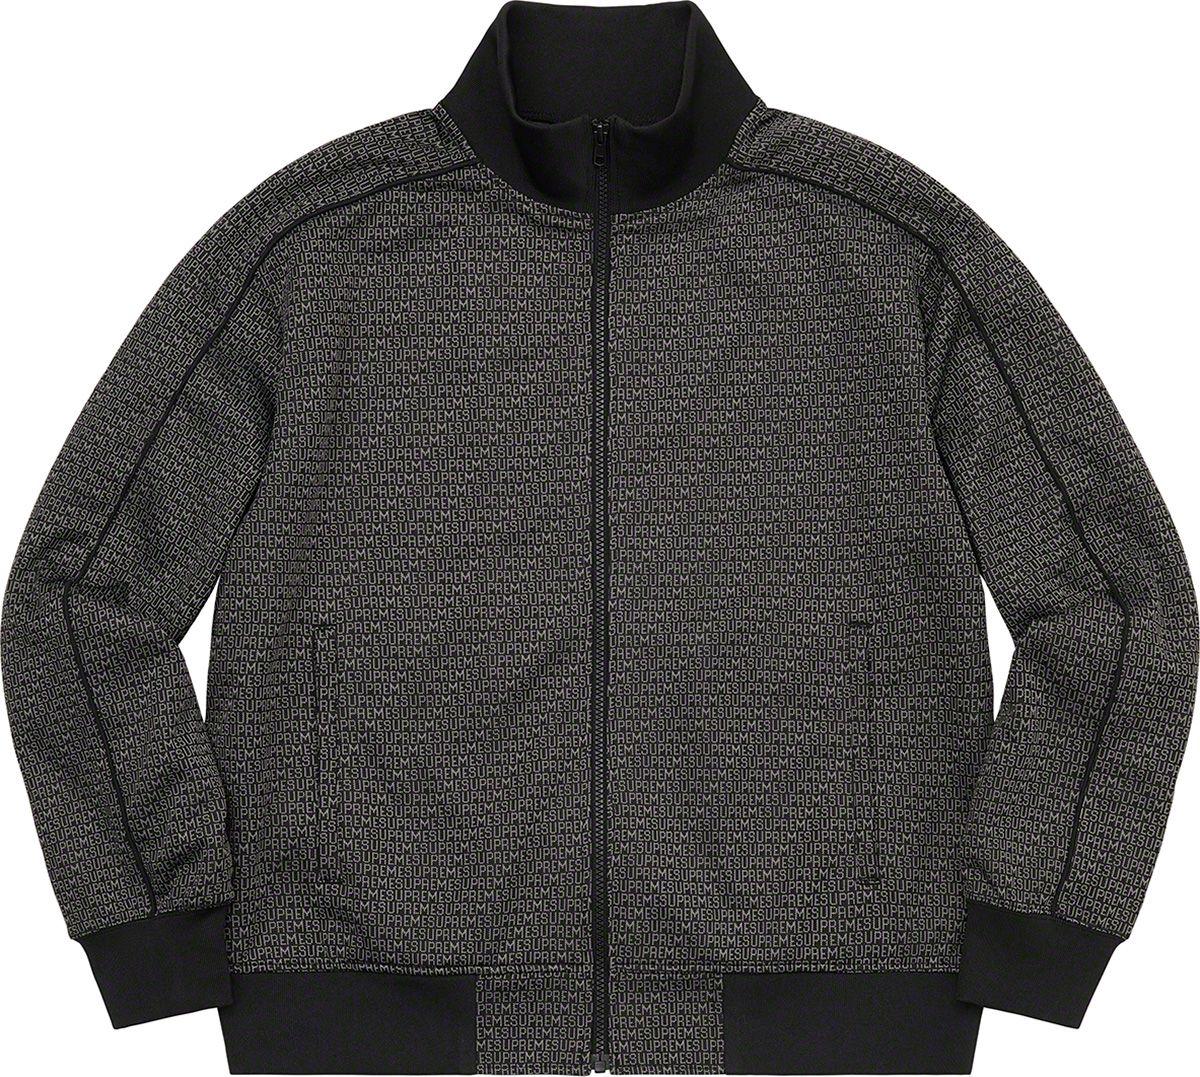 Supreme®/Schott® Leather Work Jacket - Spring/Summer 2022 Preview 